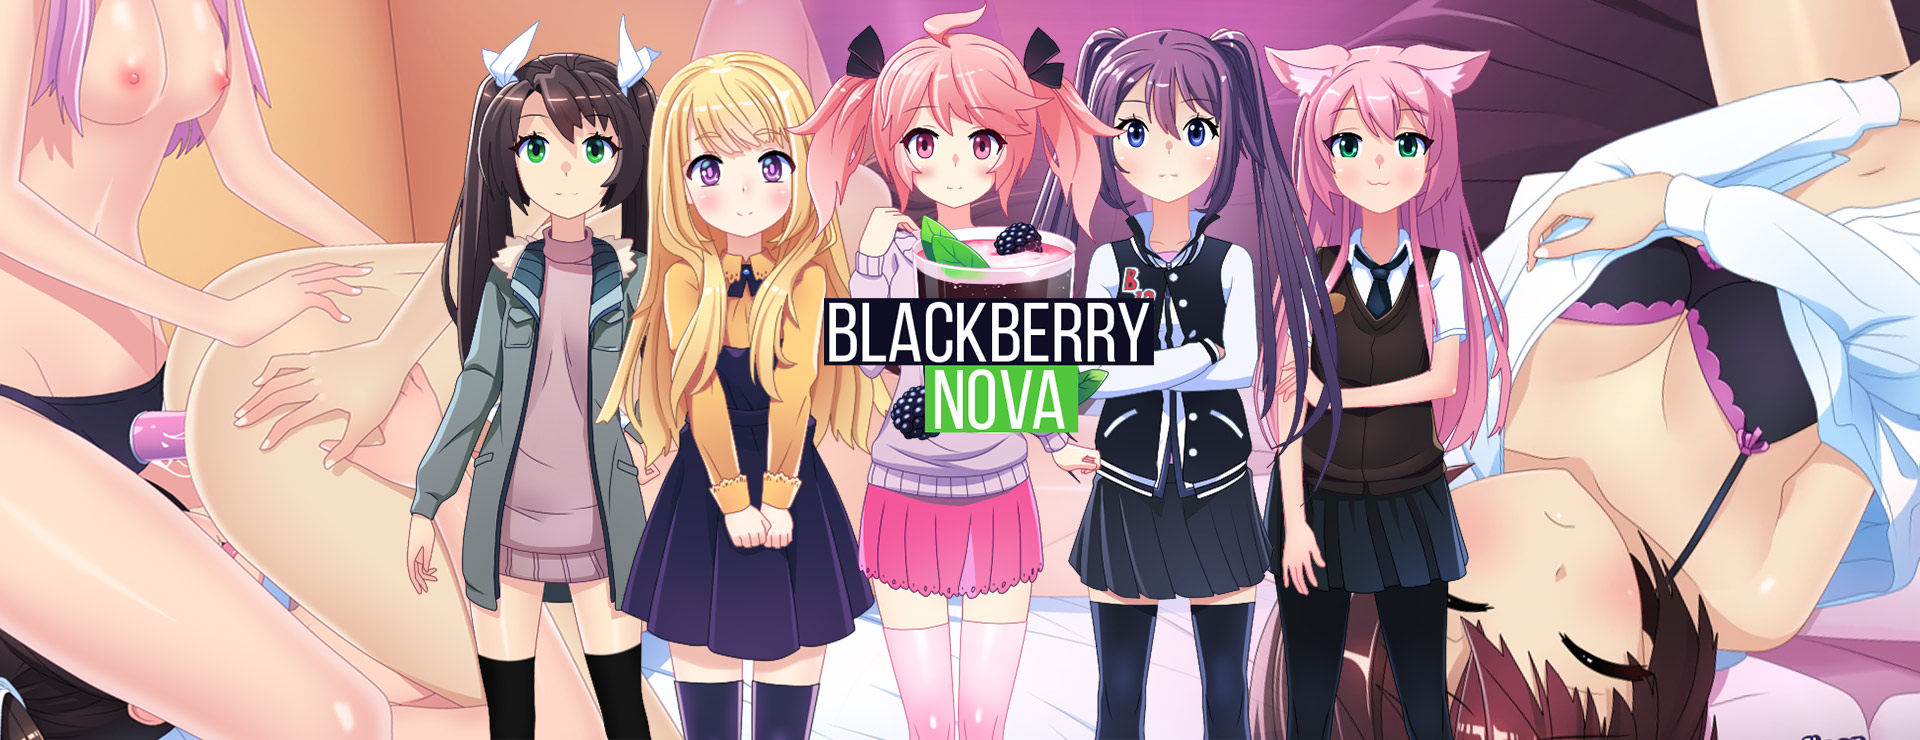 BlackberryNOVA - ビジュアルノベル ゲーム